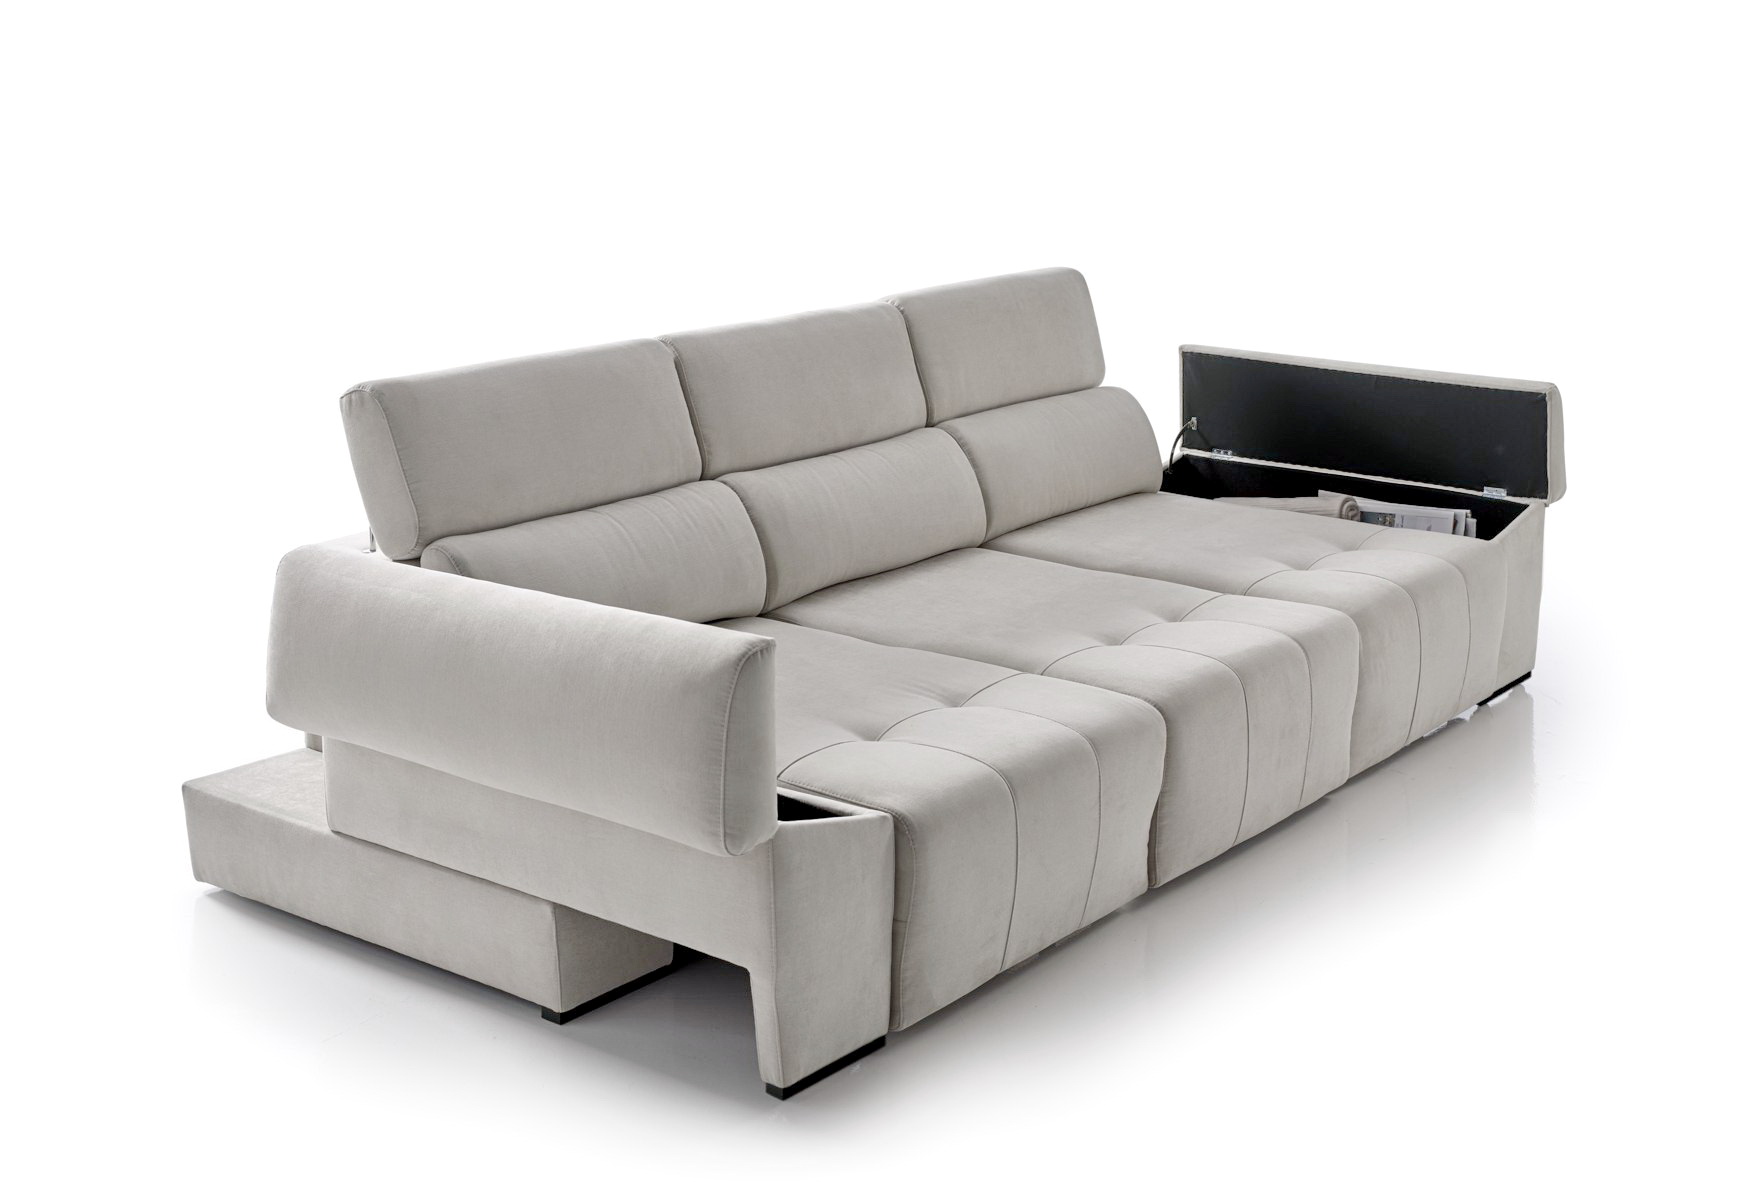 COKTEL 6 sofá modular transformable by Future Design Confort en muebles antoñán® León